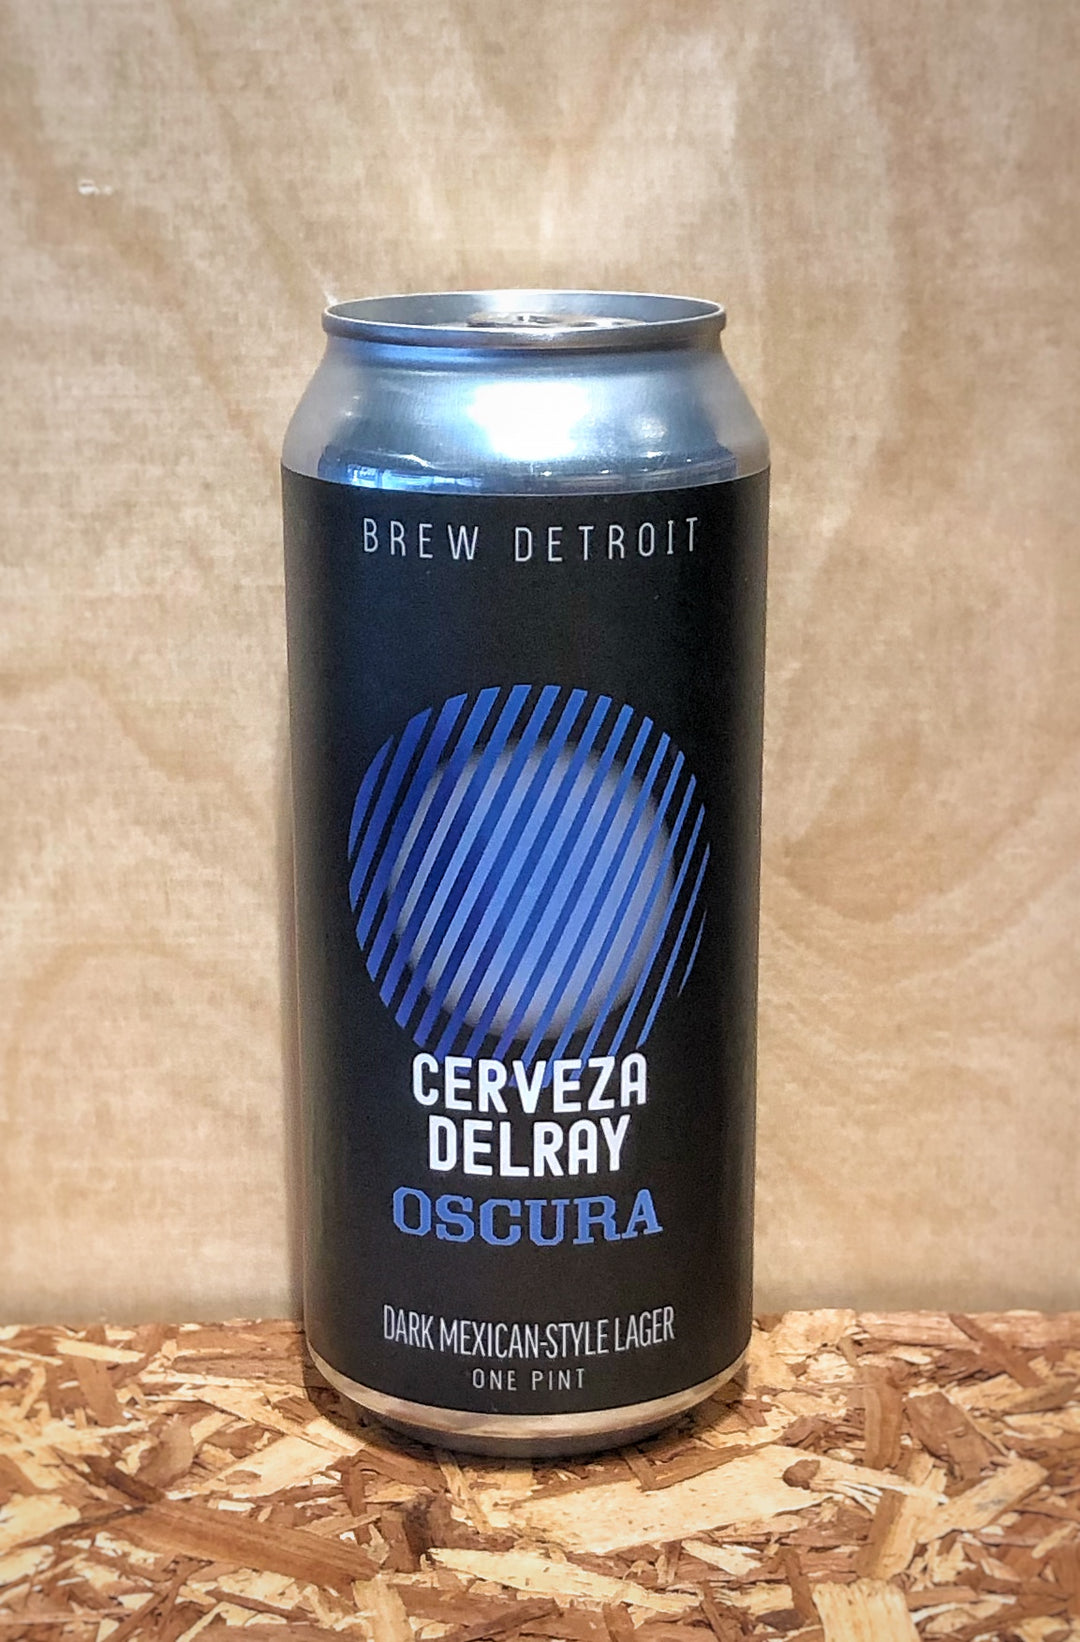 Brew Detroit 'Cerveza Delray Oscura' Mexican Style Dark Lager (Detroit, MI)